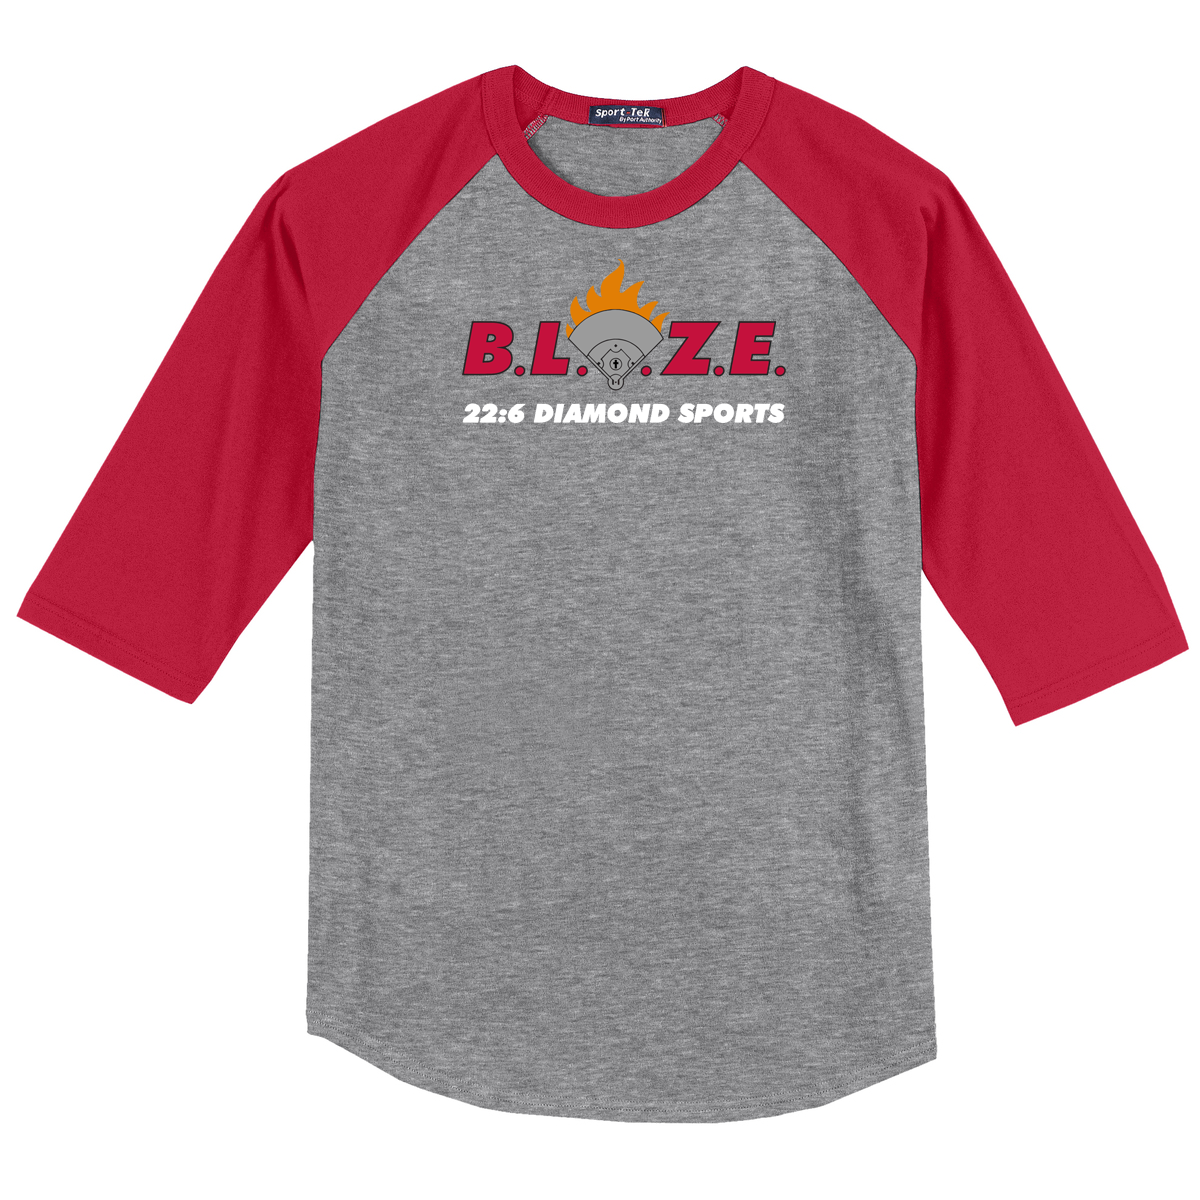 BLAZE 22:6 Diamond Sports 3/4 Sleeve Baseball Shirt